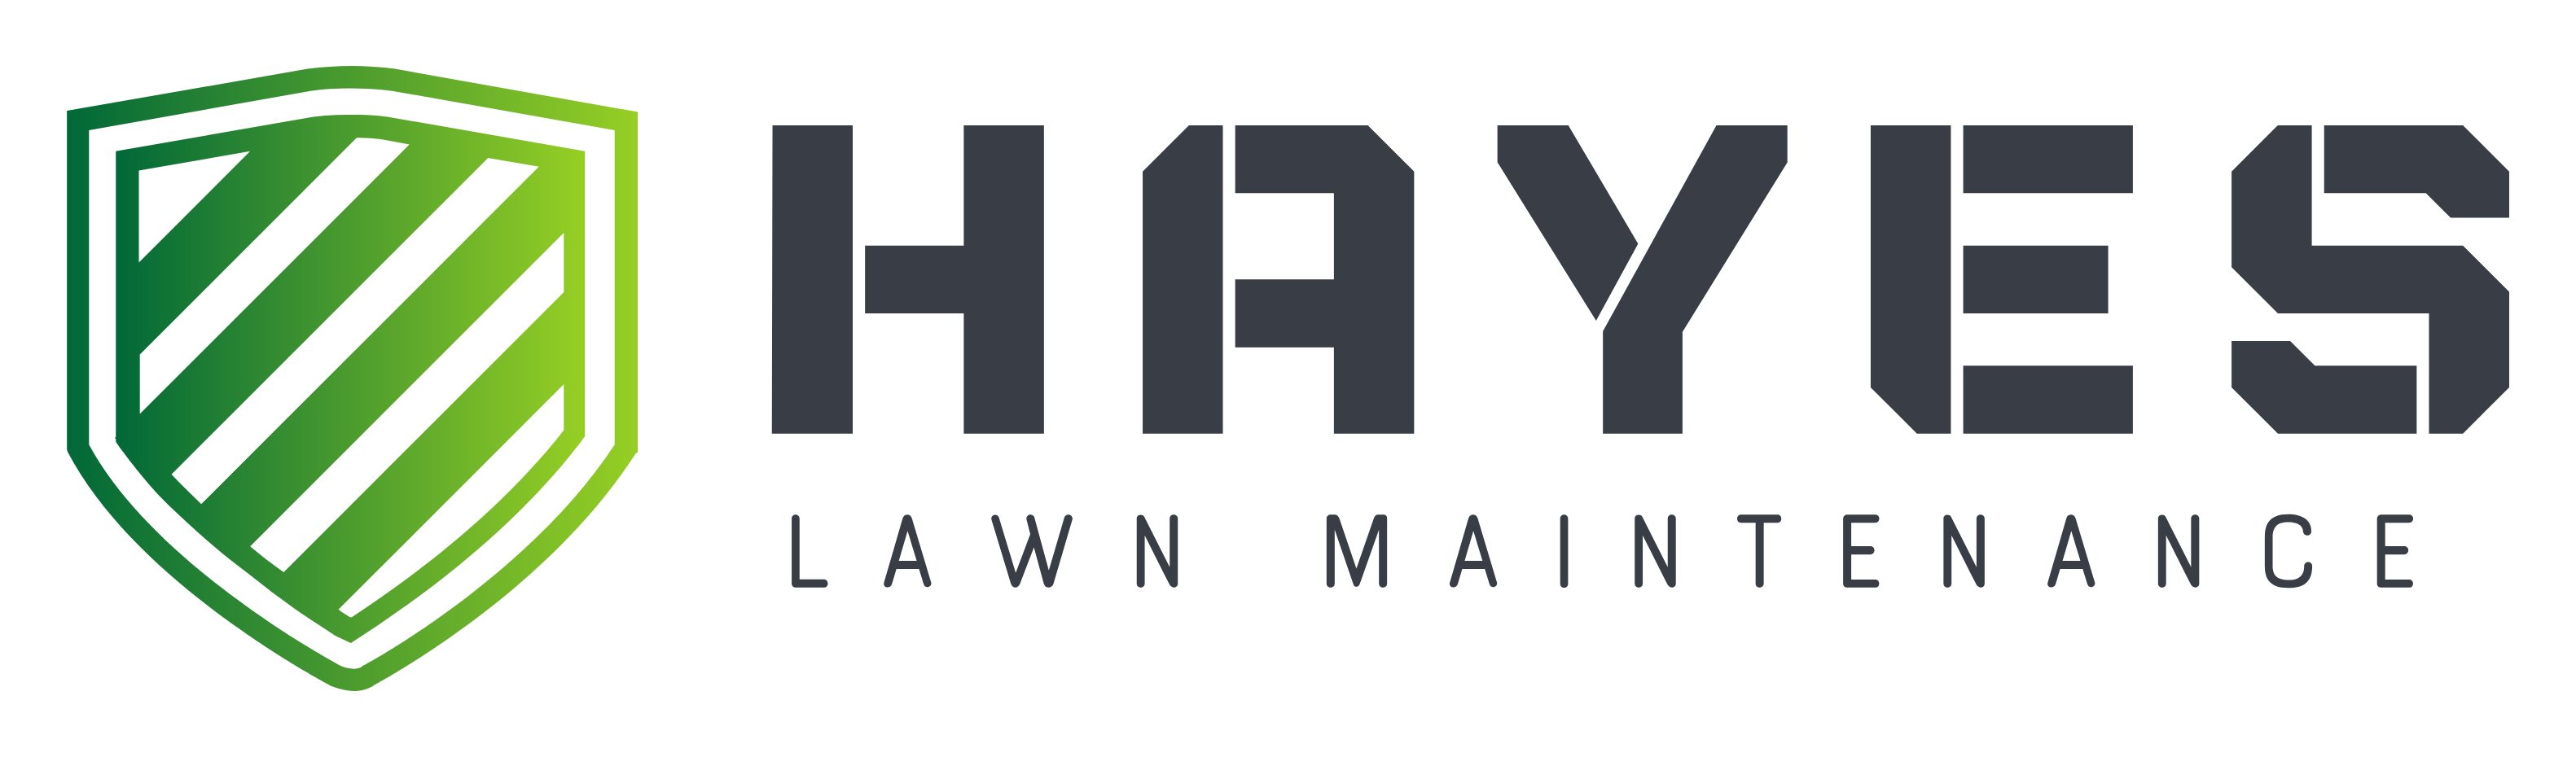 Hayes Lawn Maintenance Logo